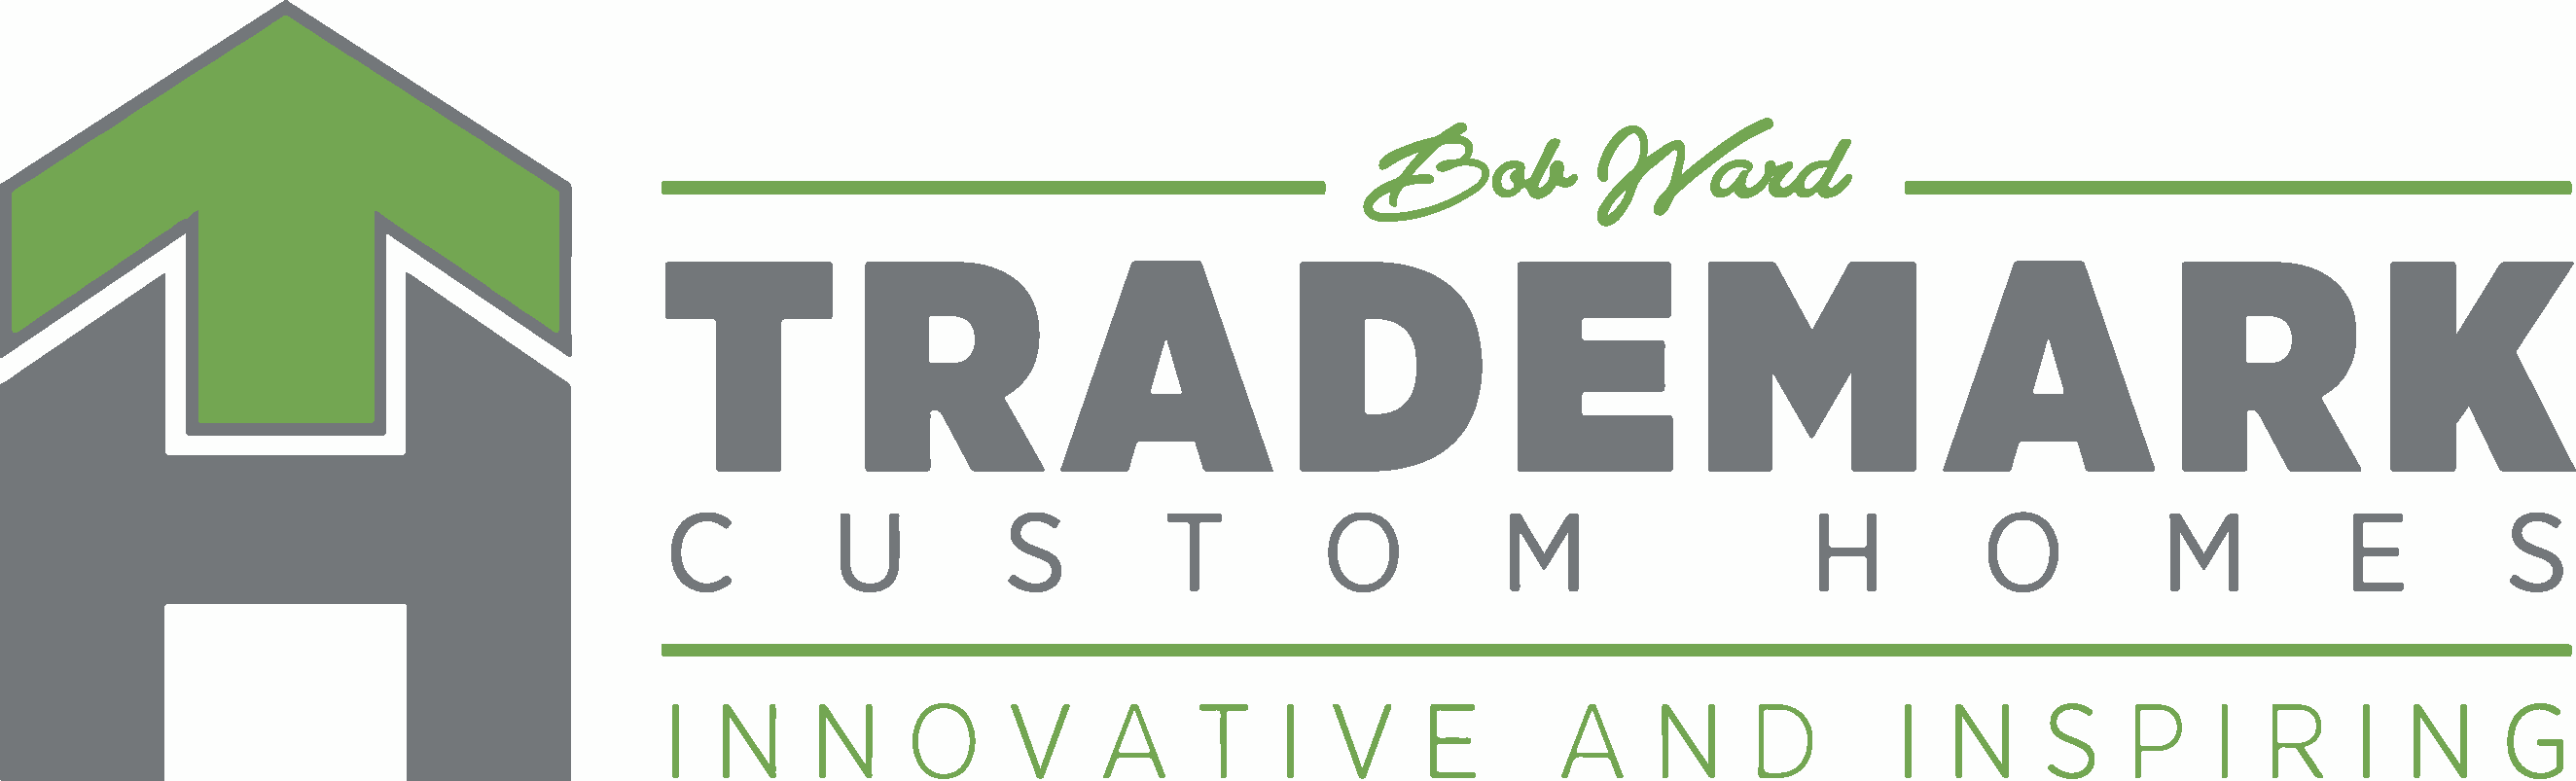 Bob Ward Trademark Custom Homes